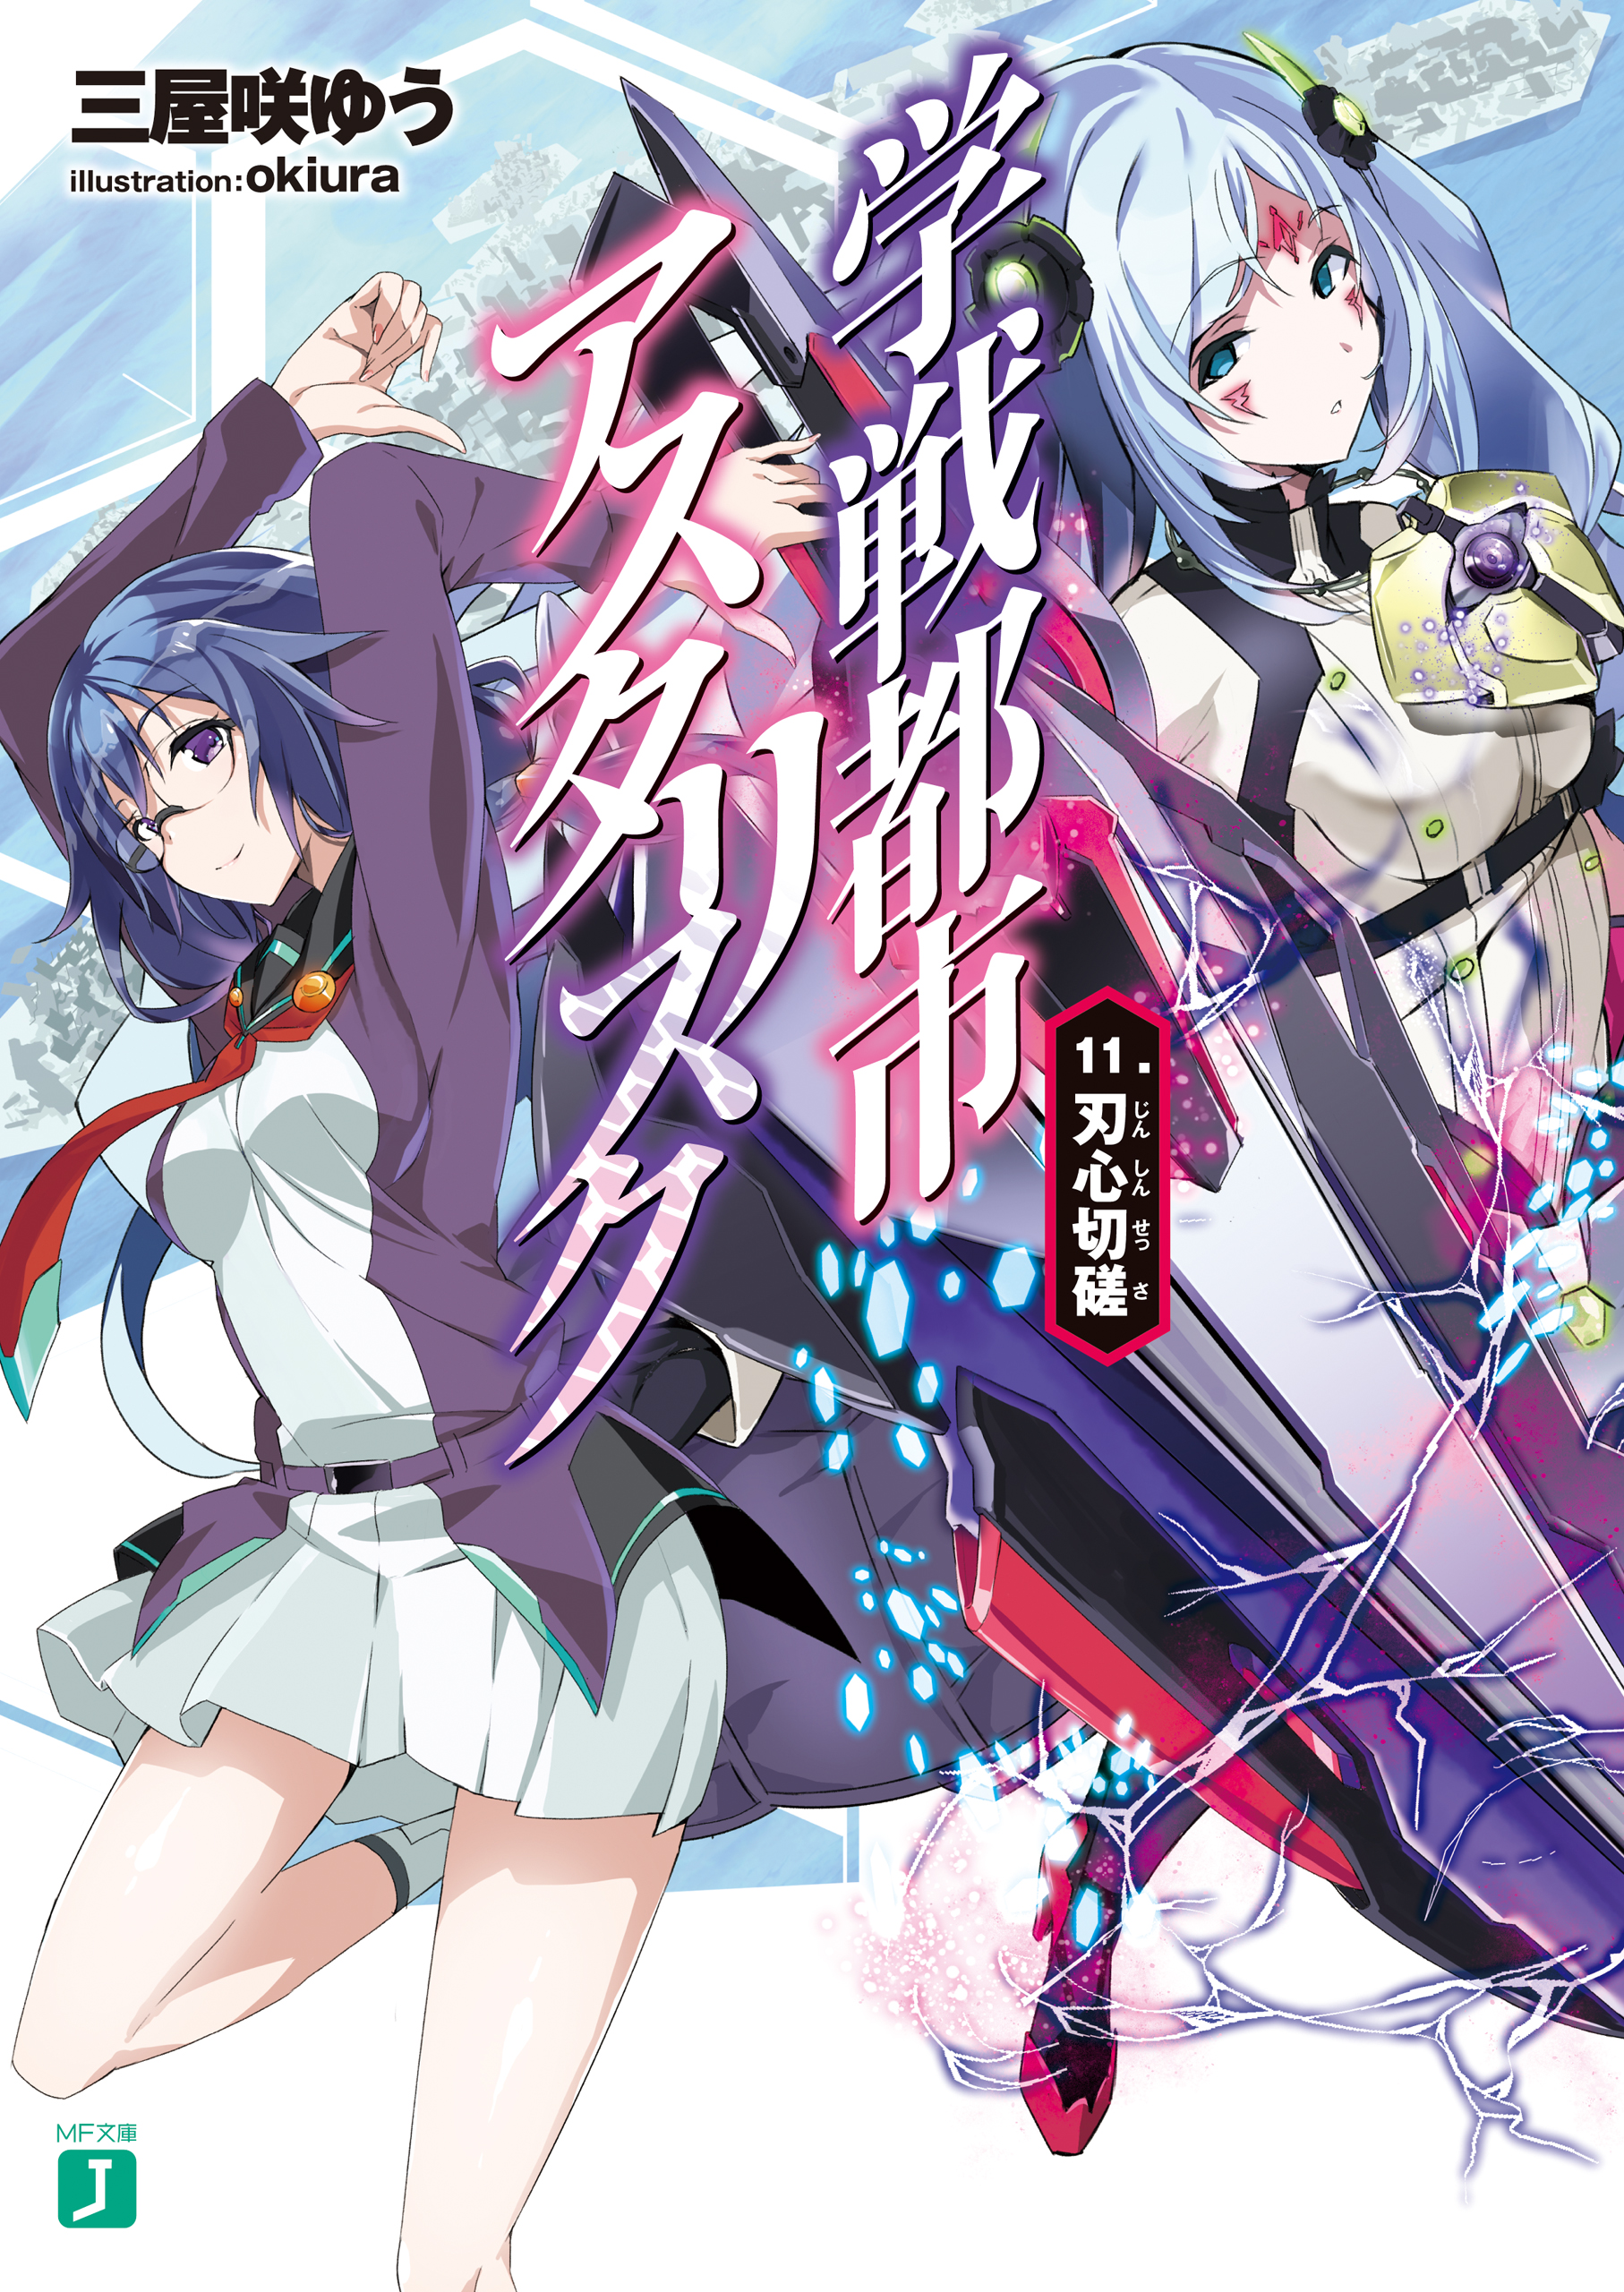 Gakusen Toshi Asterisk  Light novel, Anime, Anime episodes